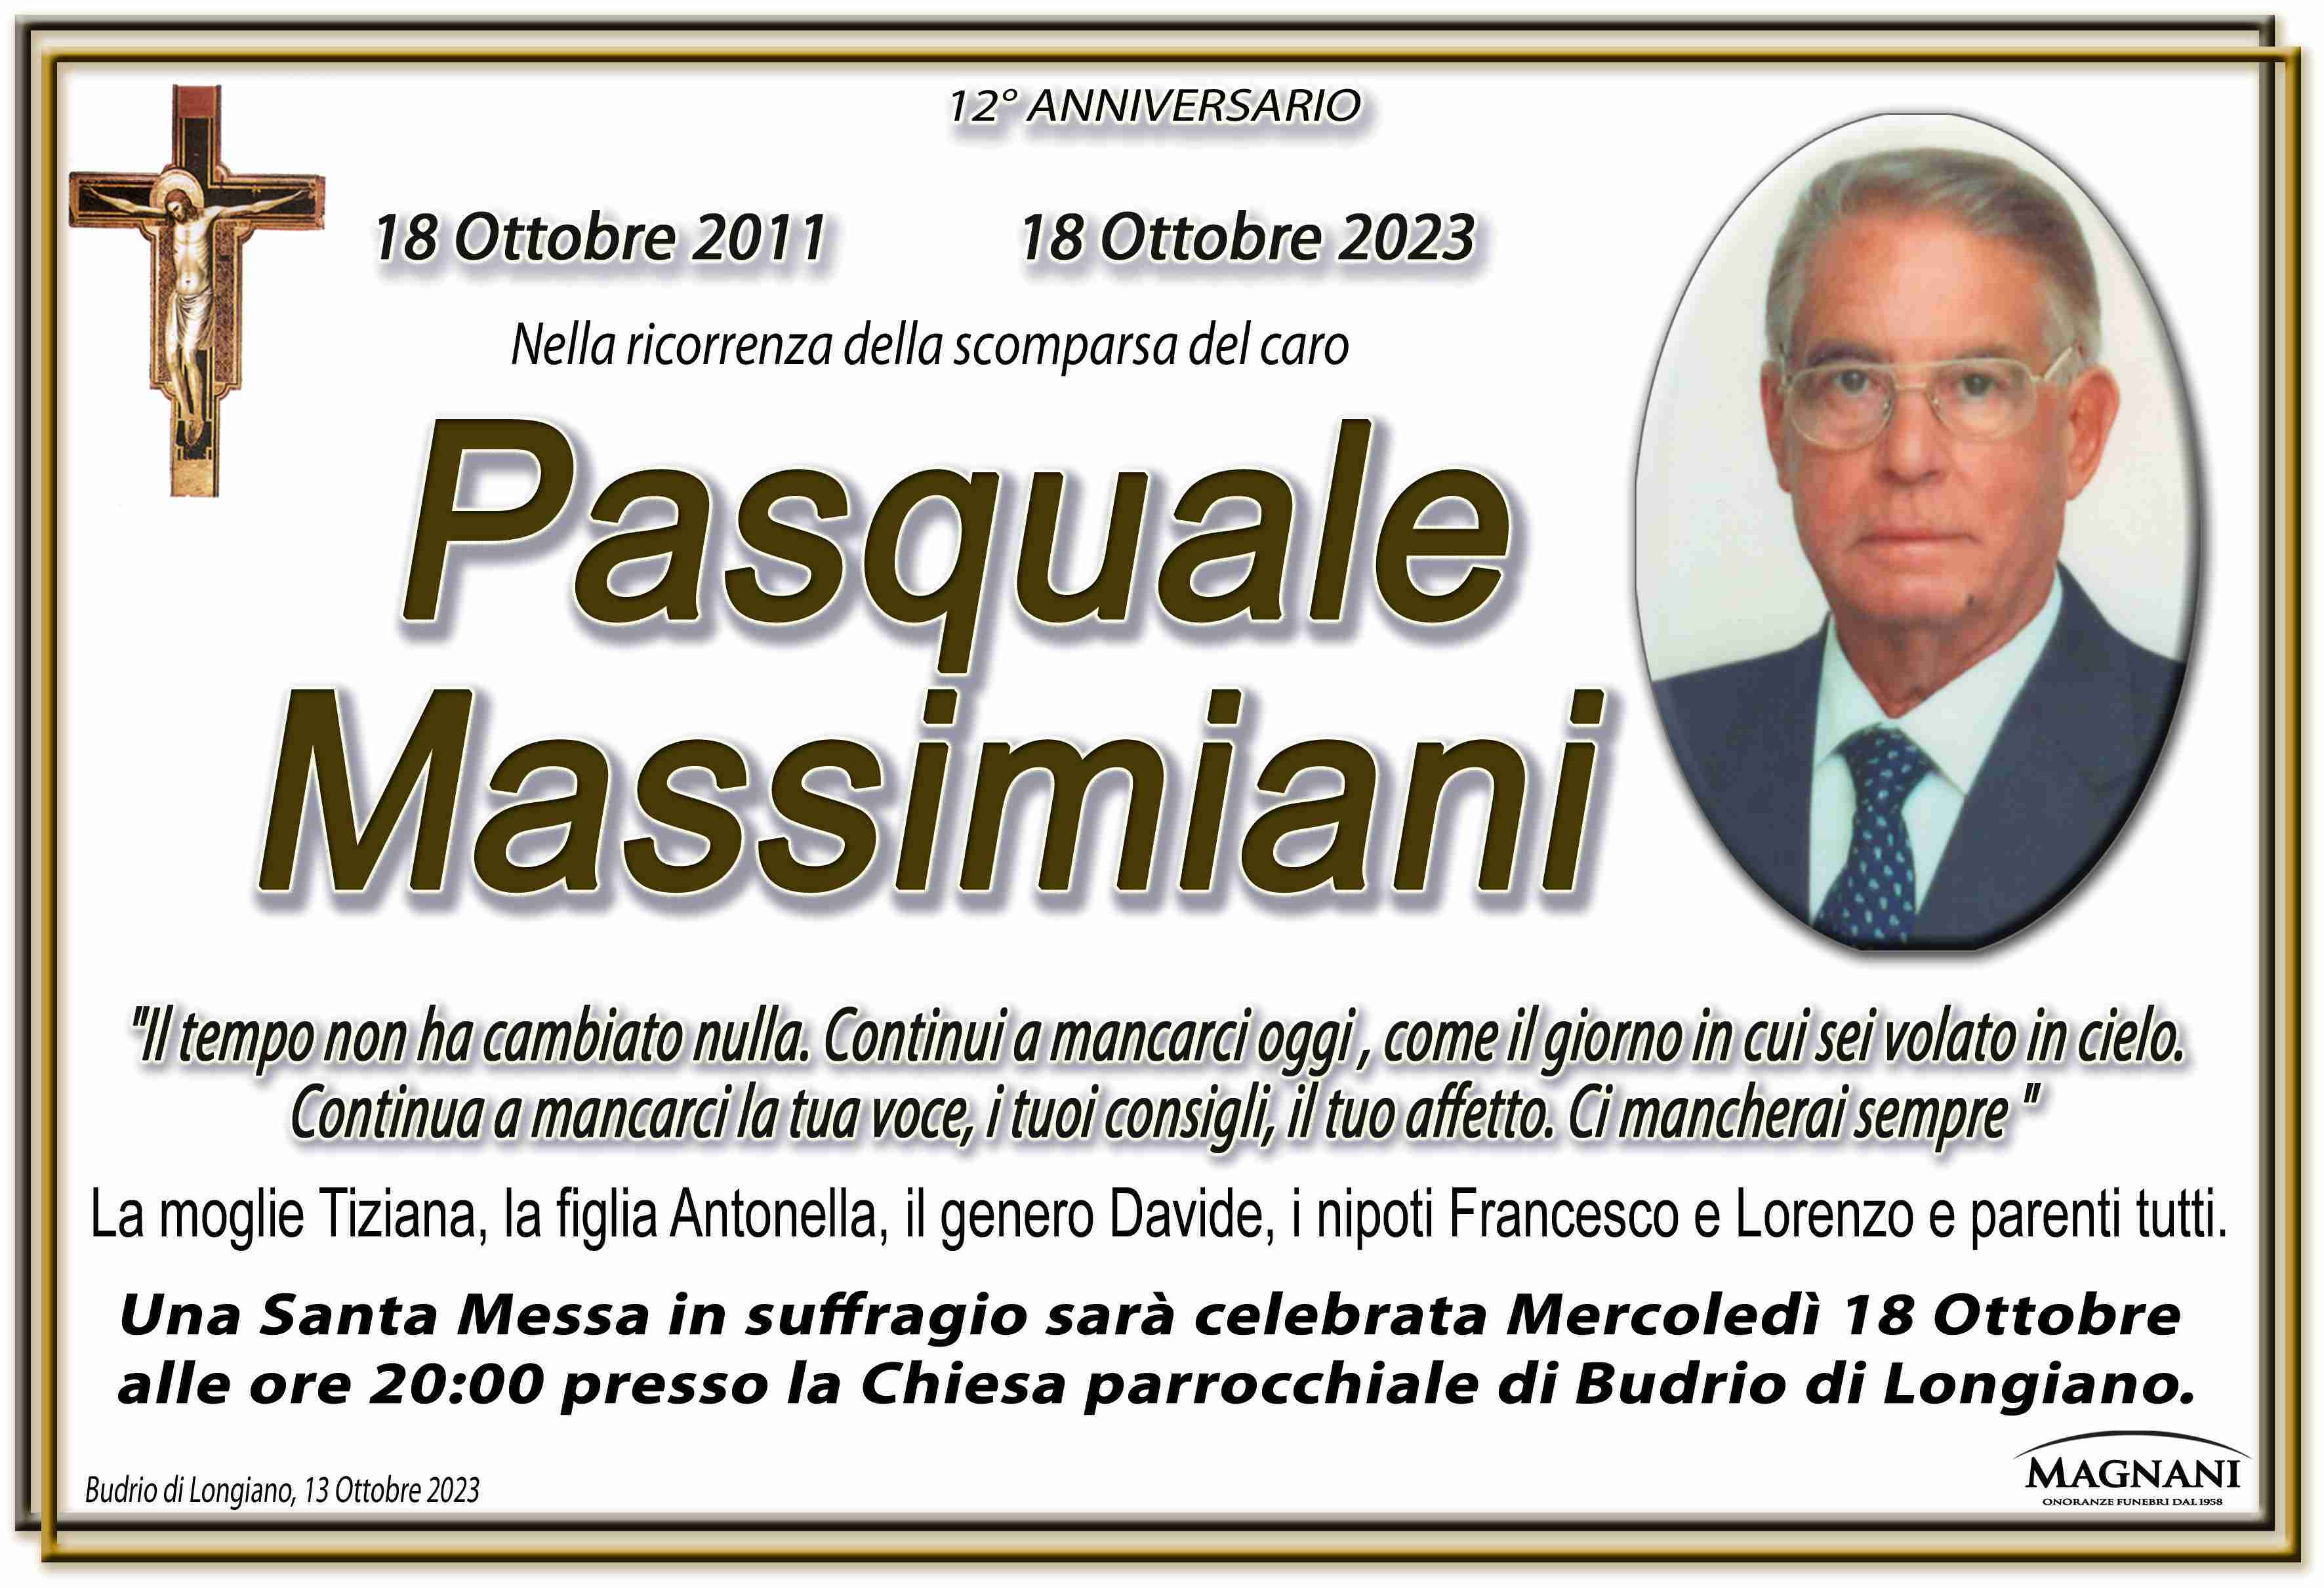 Pasquale Massimiani